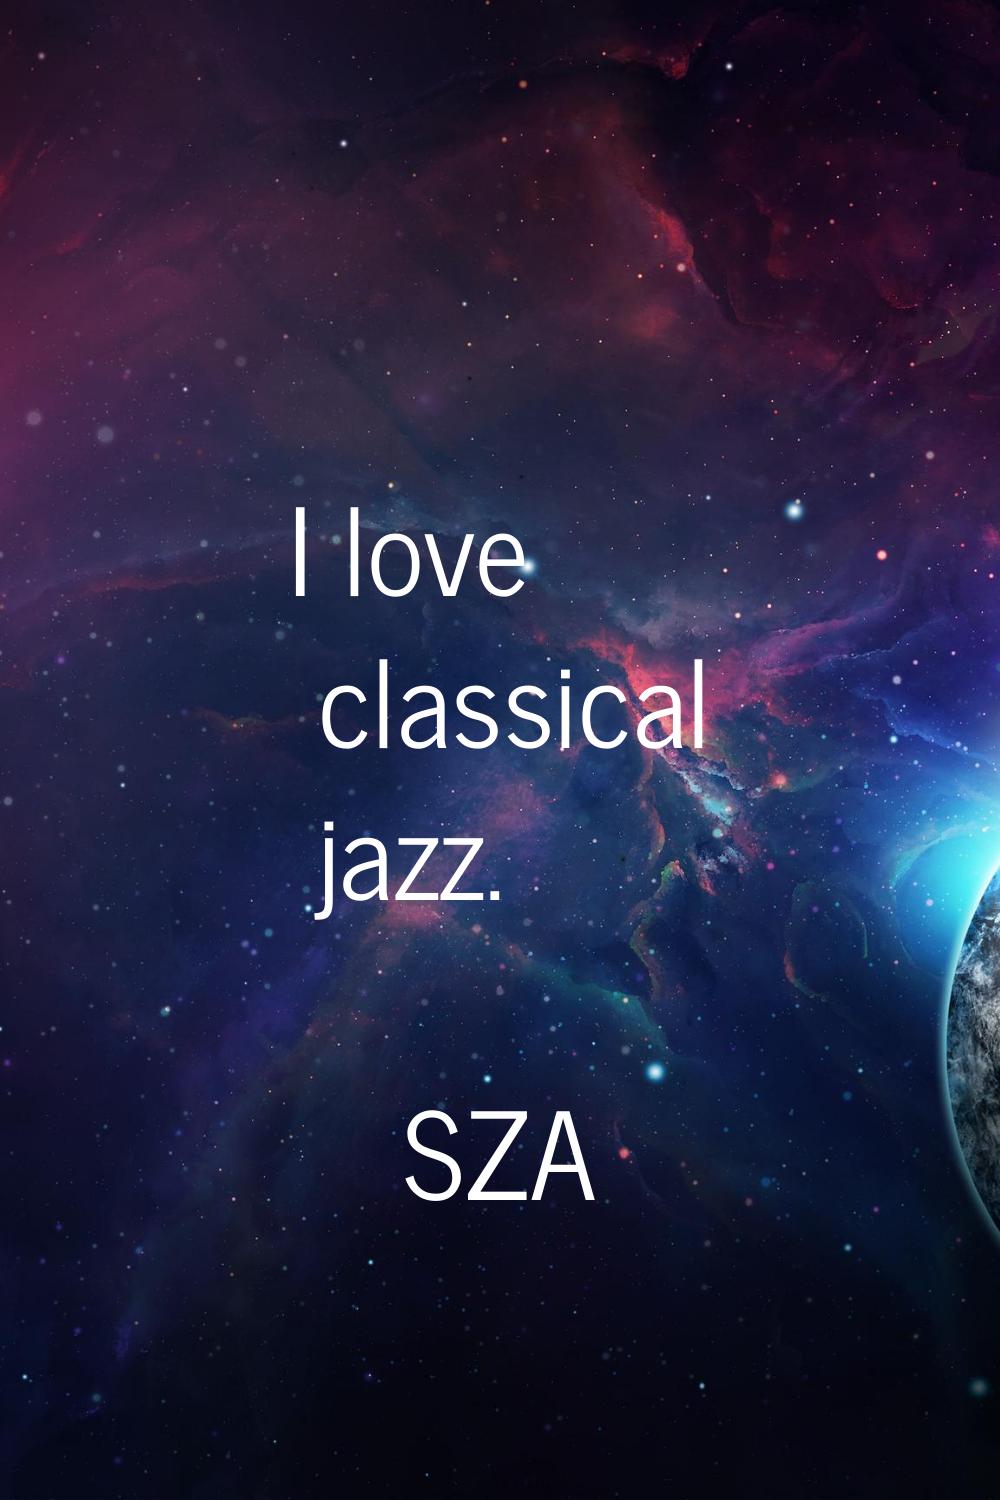 I love classical jazz.